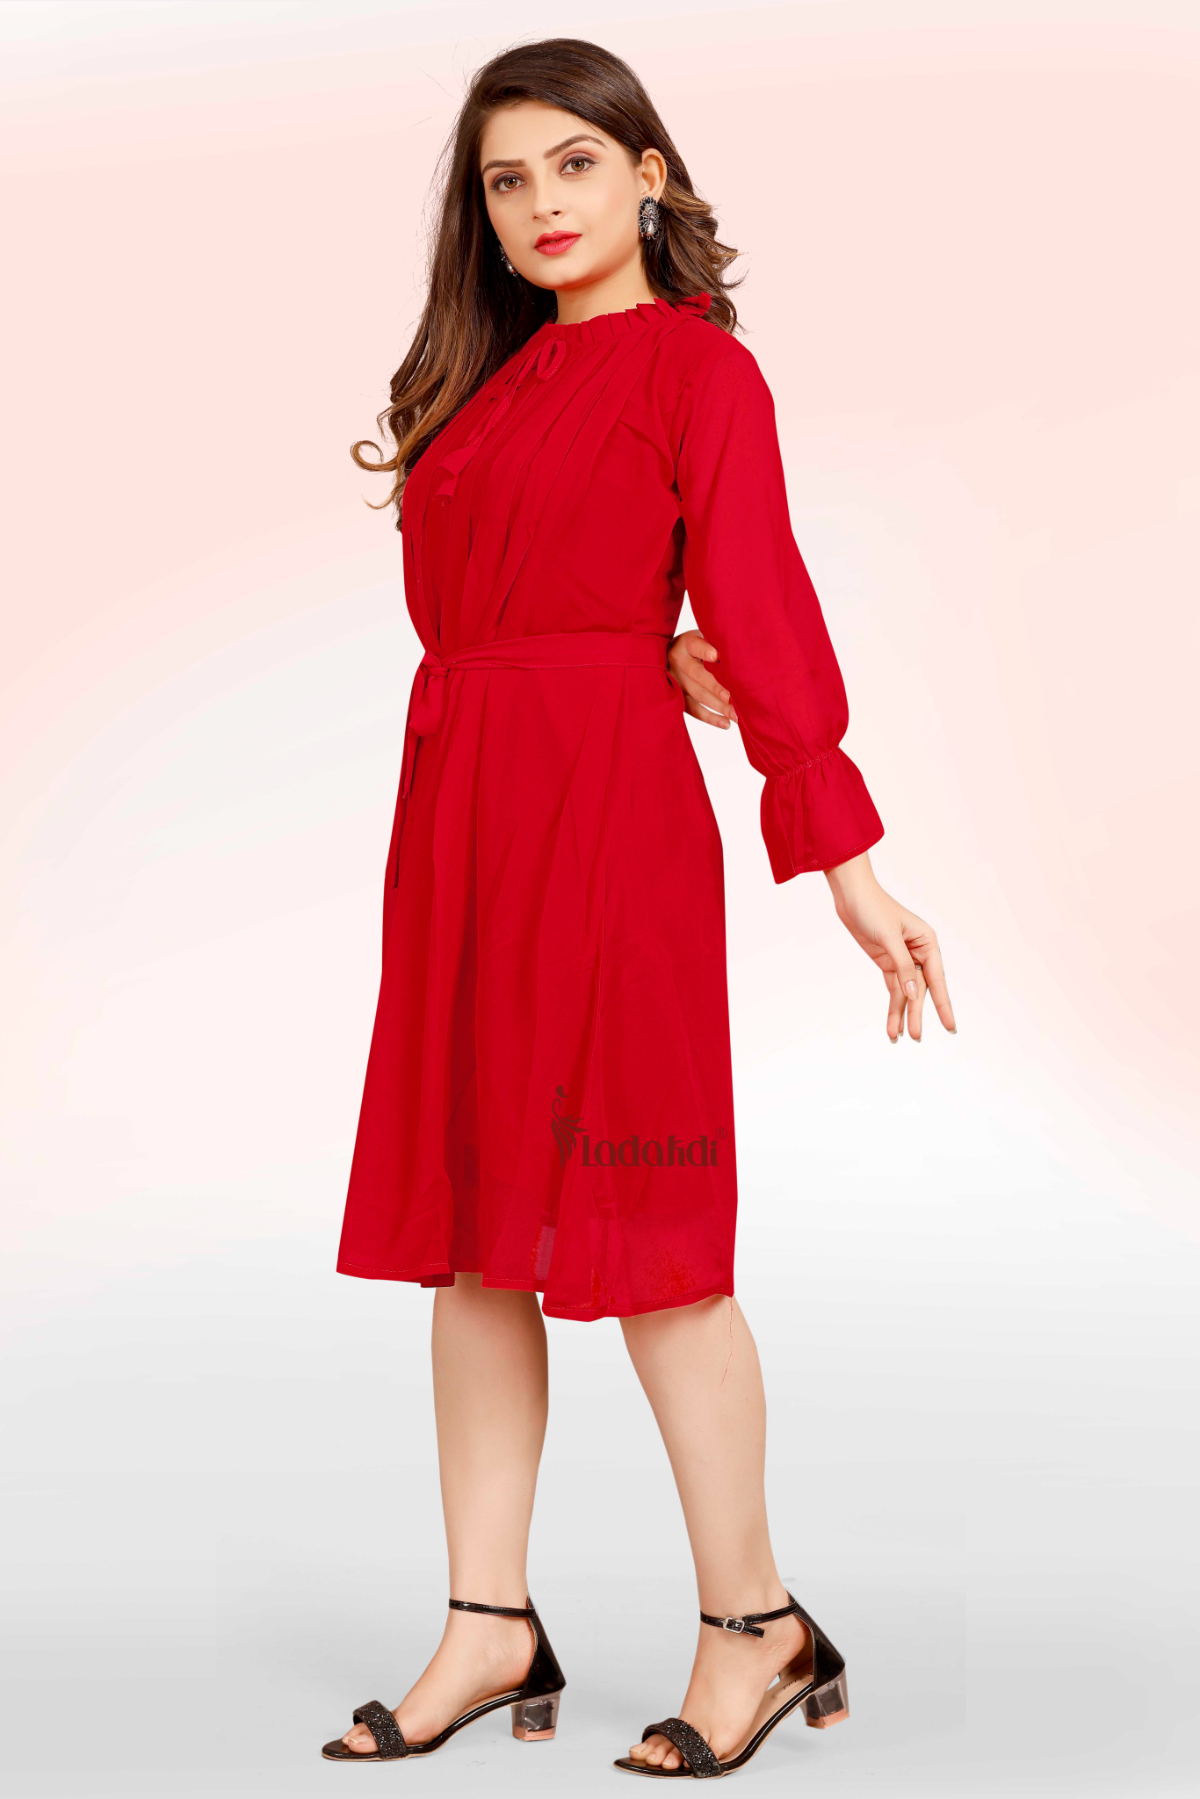 Buy Fancy Western Dress at Rs. 400 online from Fab Funda one piece dress :  FF-SQpurple